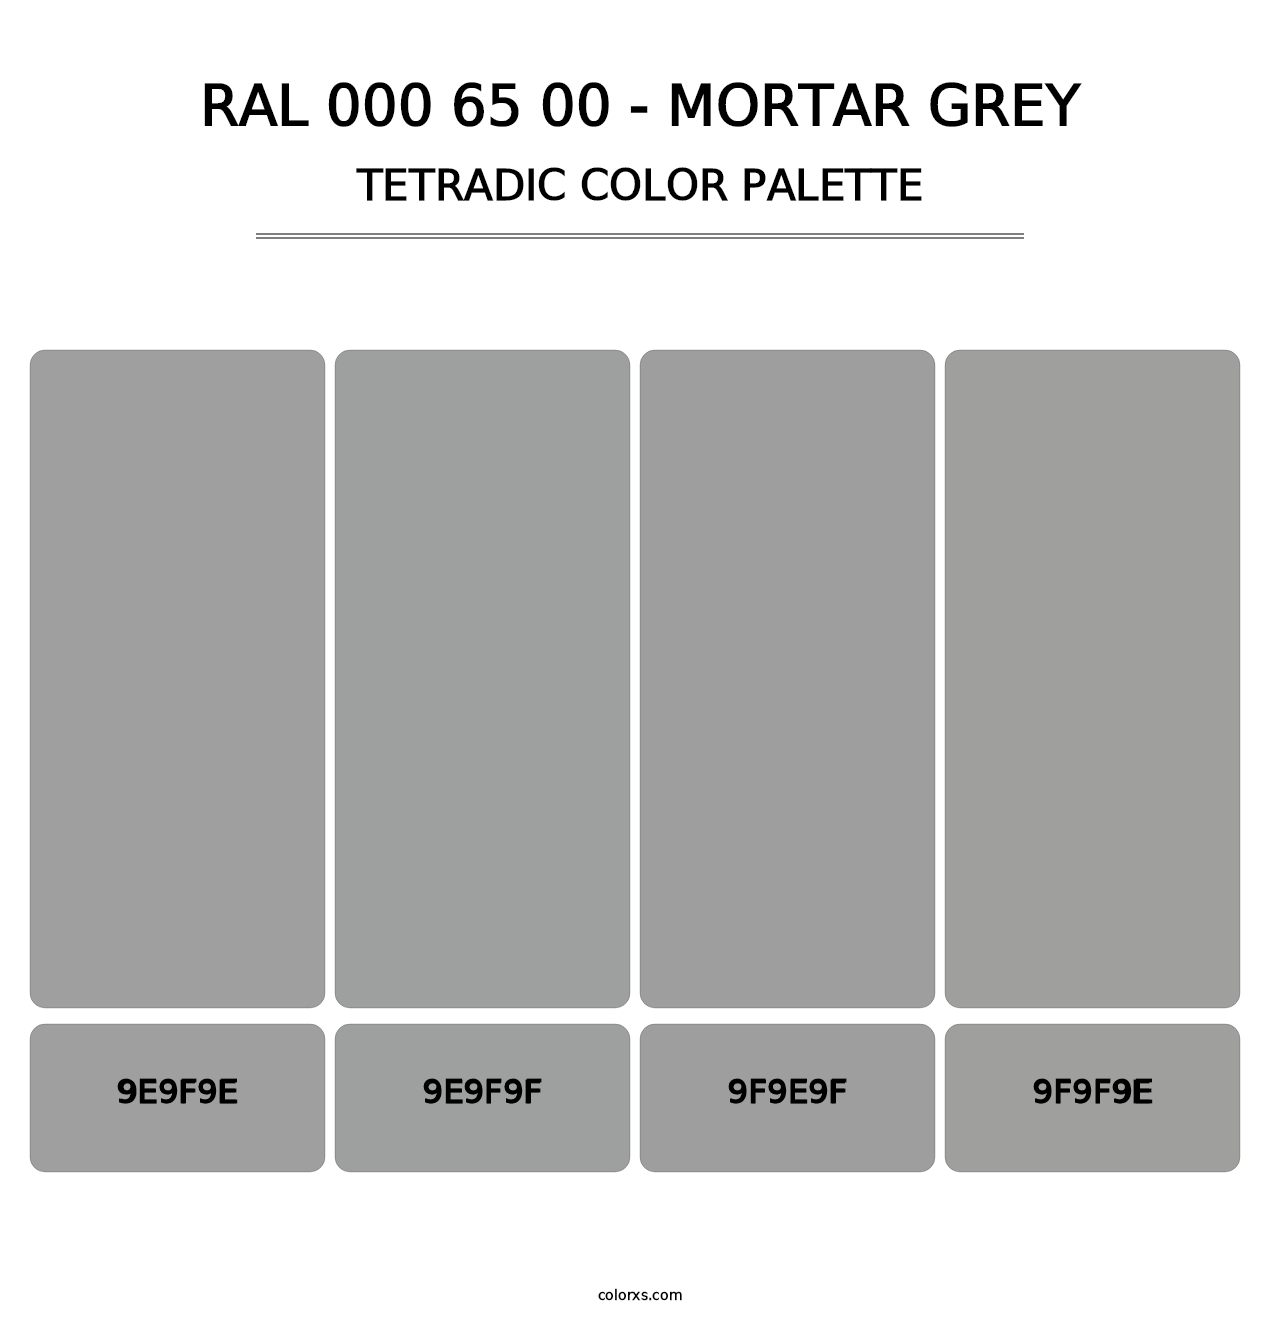 RAL 000 65 00 - Mortar Grey - Tetradic Color Palette